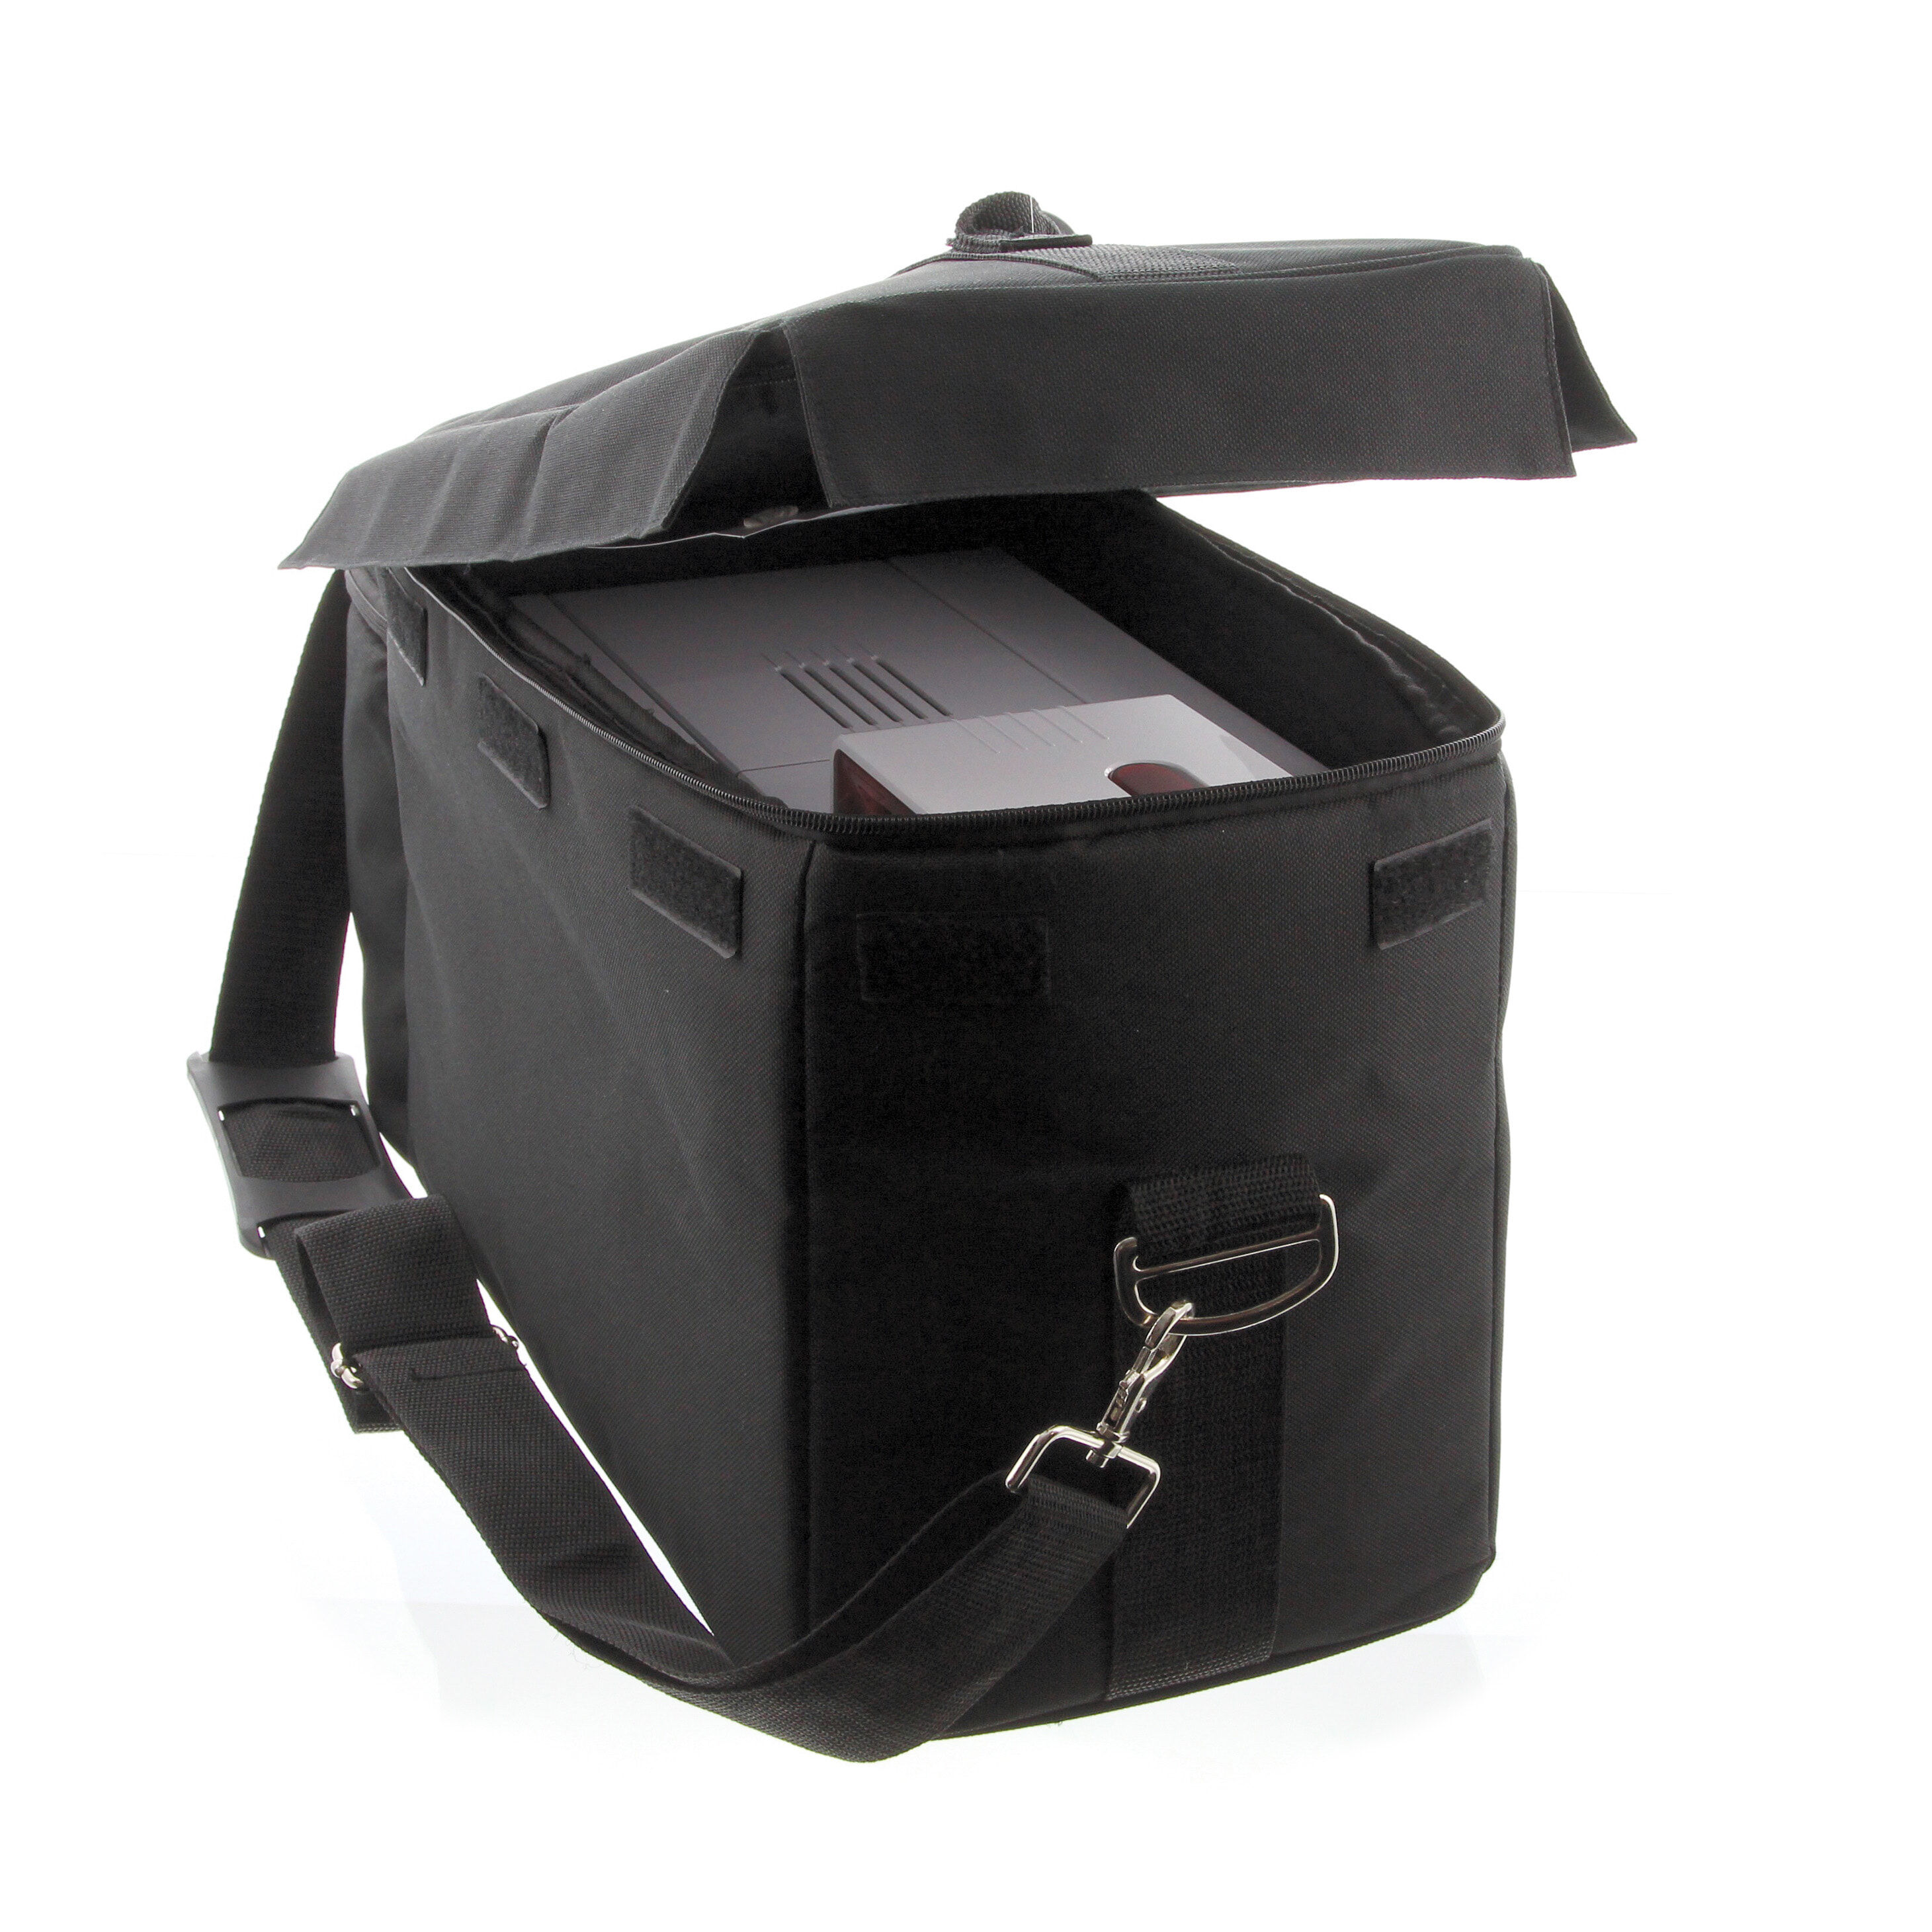 Professional travel bag for evolis Zenius & Primacy plastic card printers